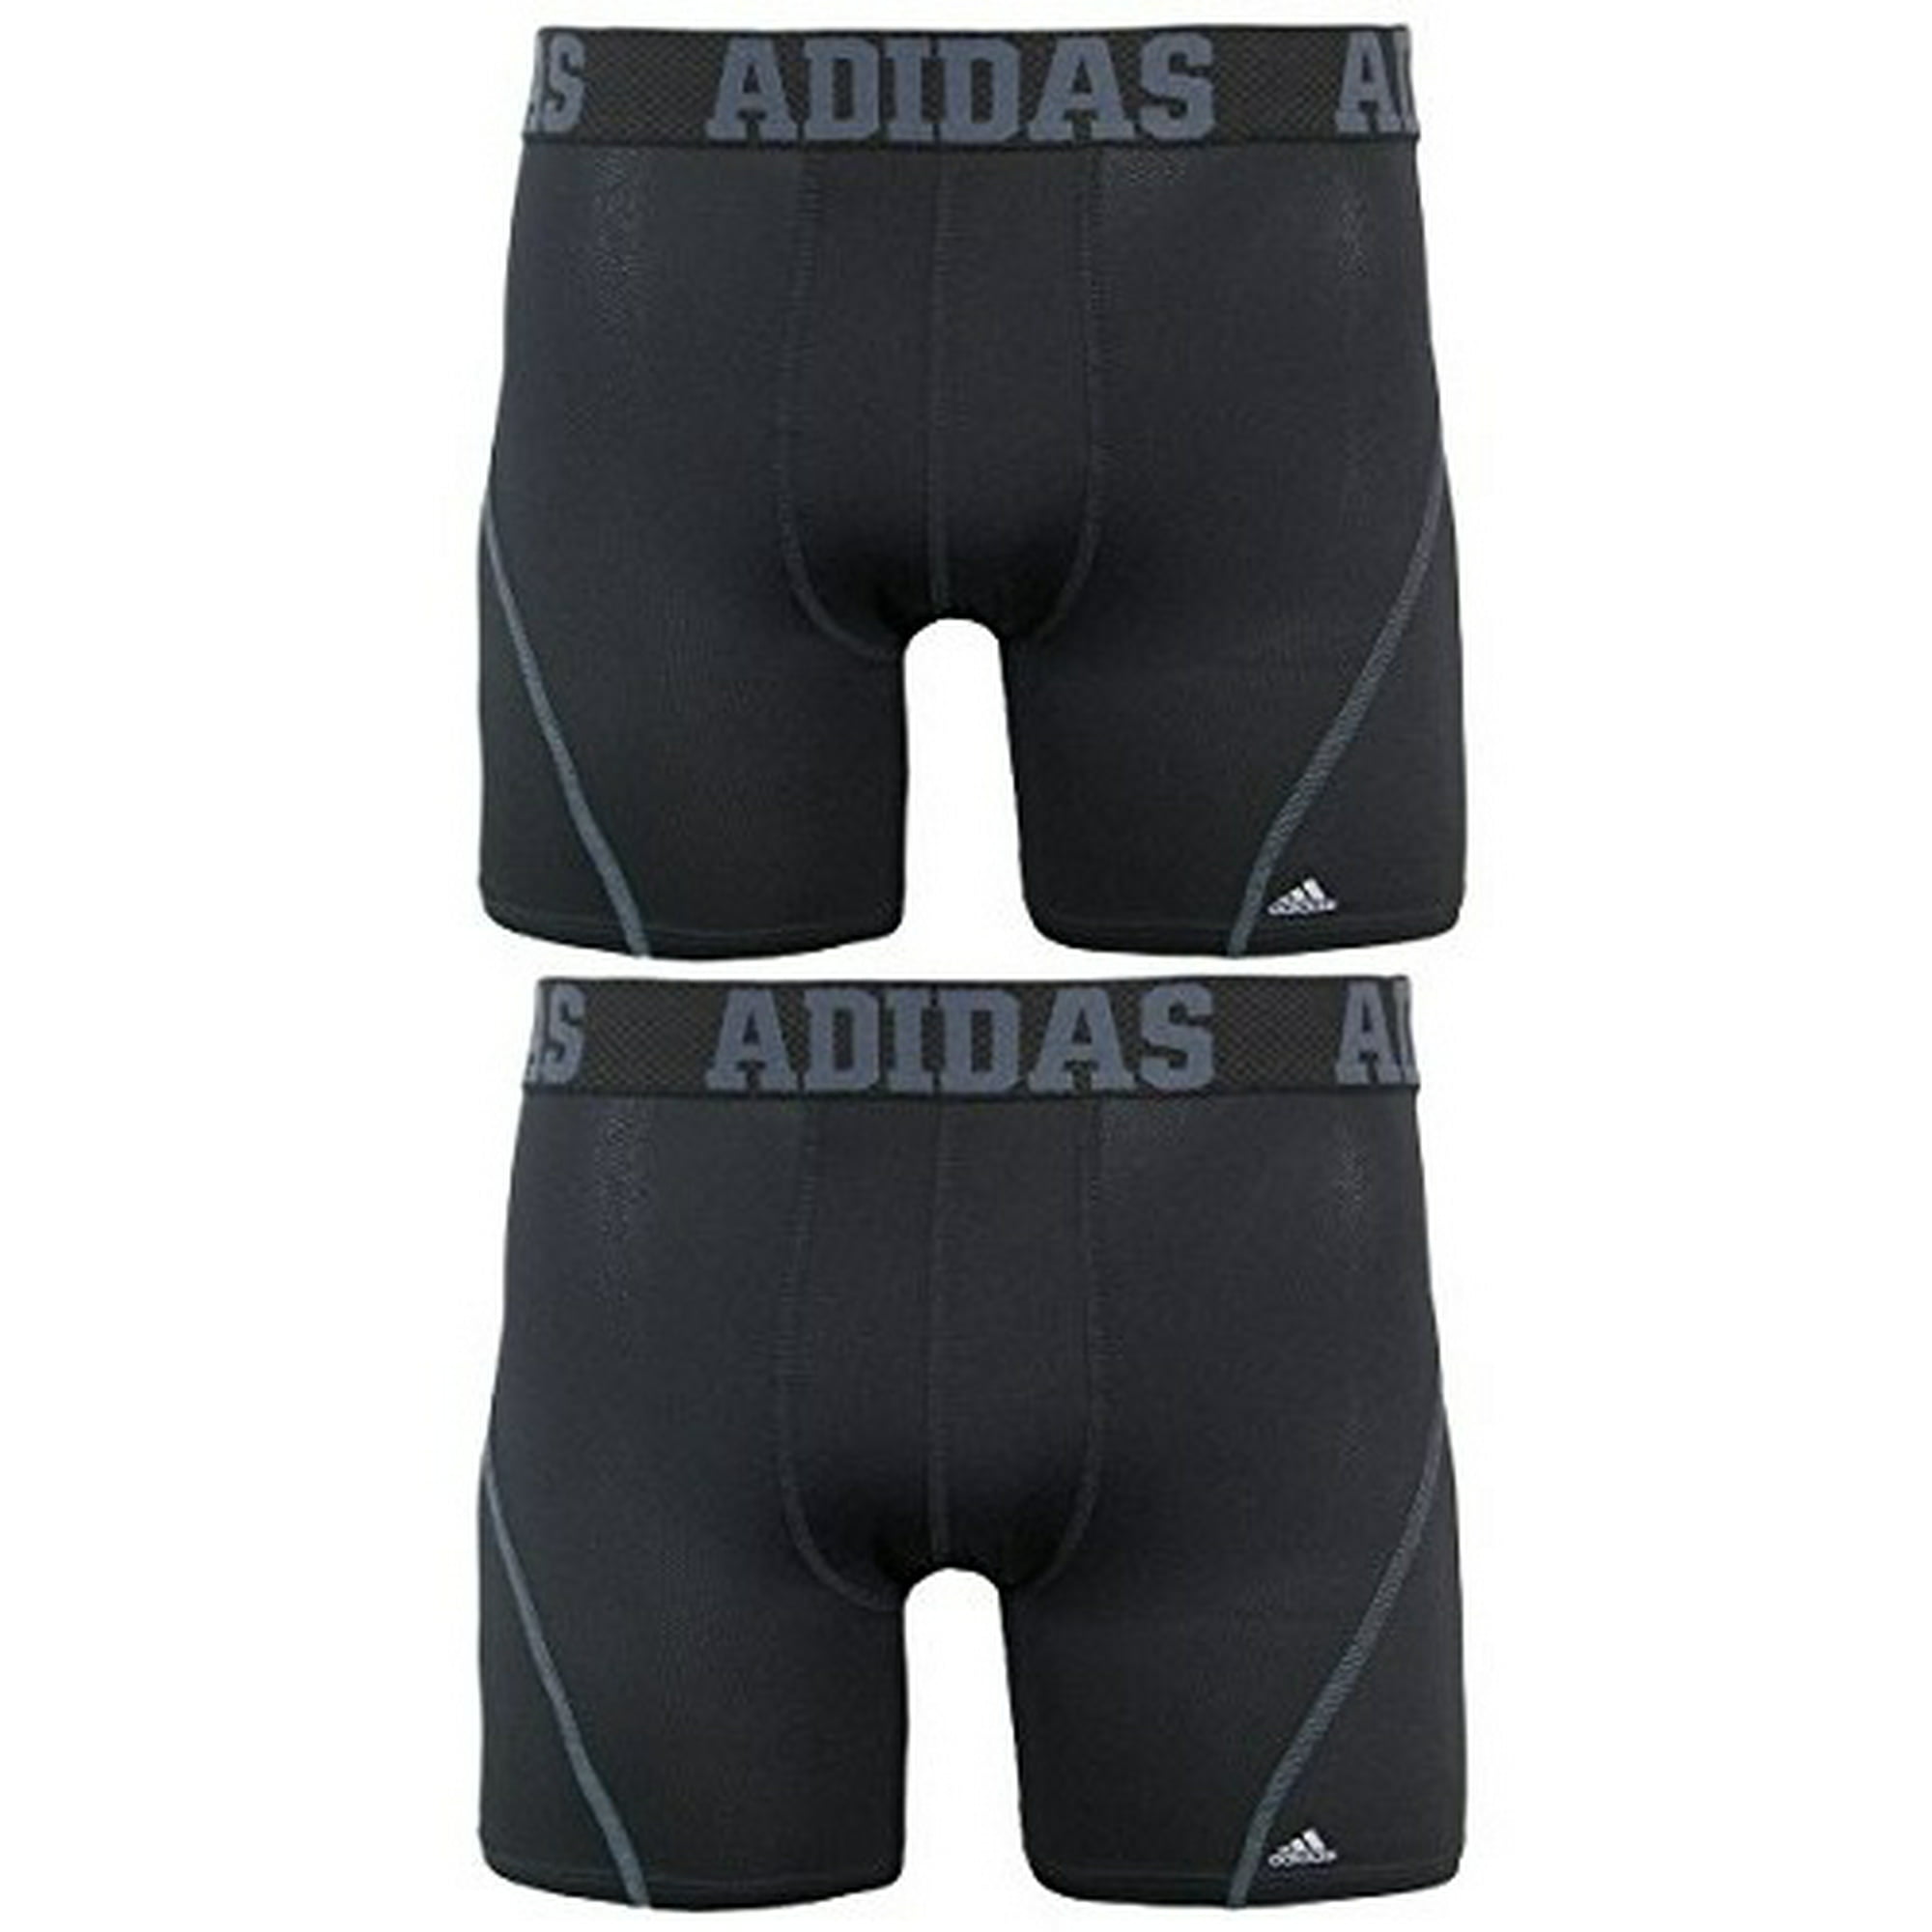 adidas Sport Performance Climacool Boxer Brief Underwear (2-Pack), Black/Thunder Grey, Medium - Walmart.com